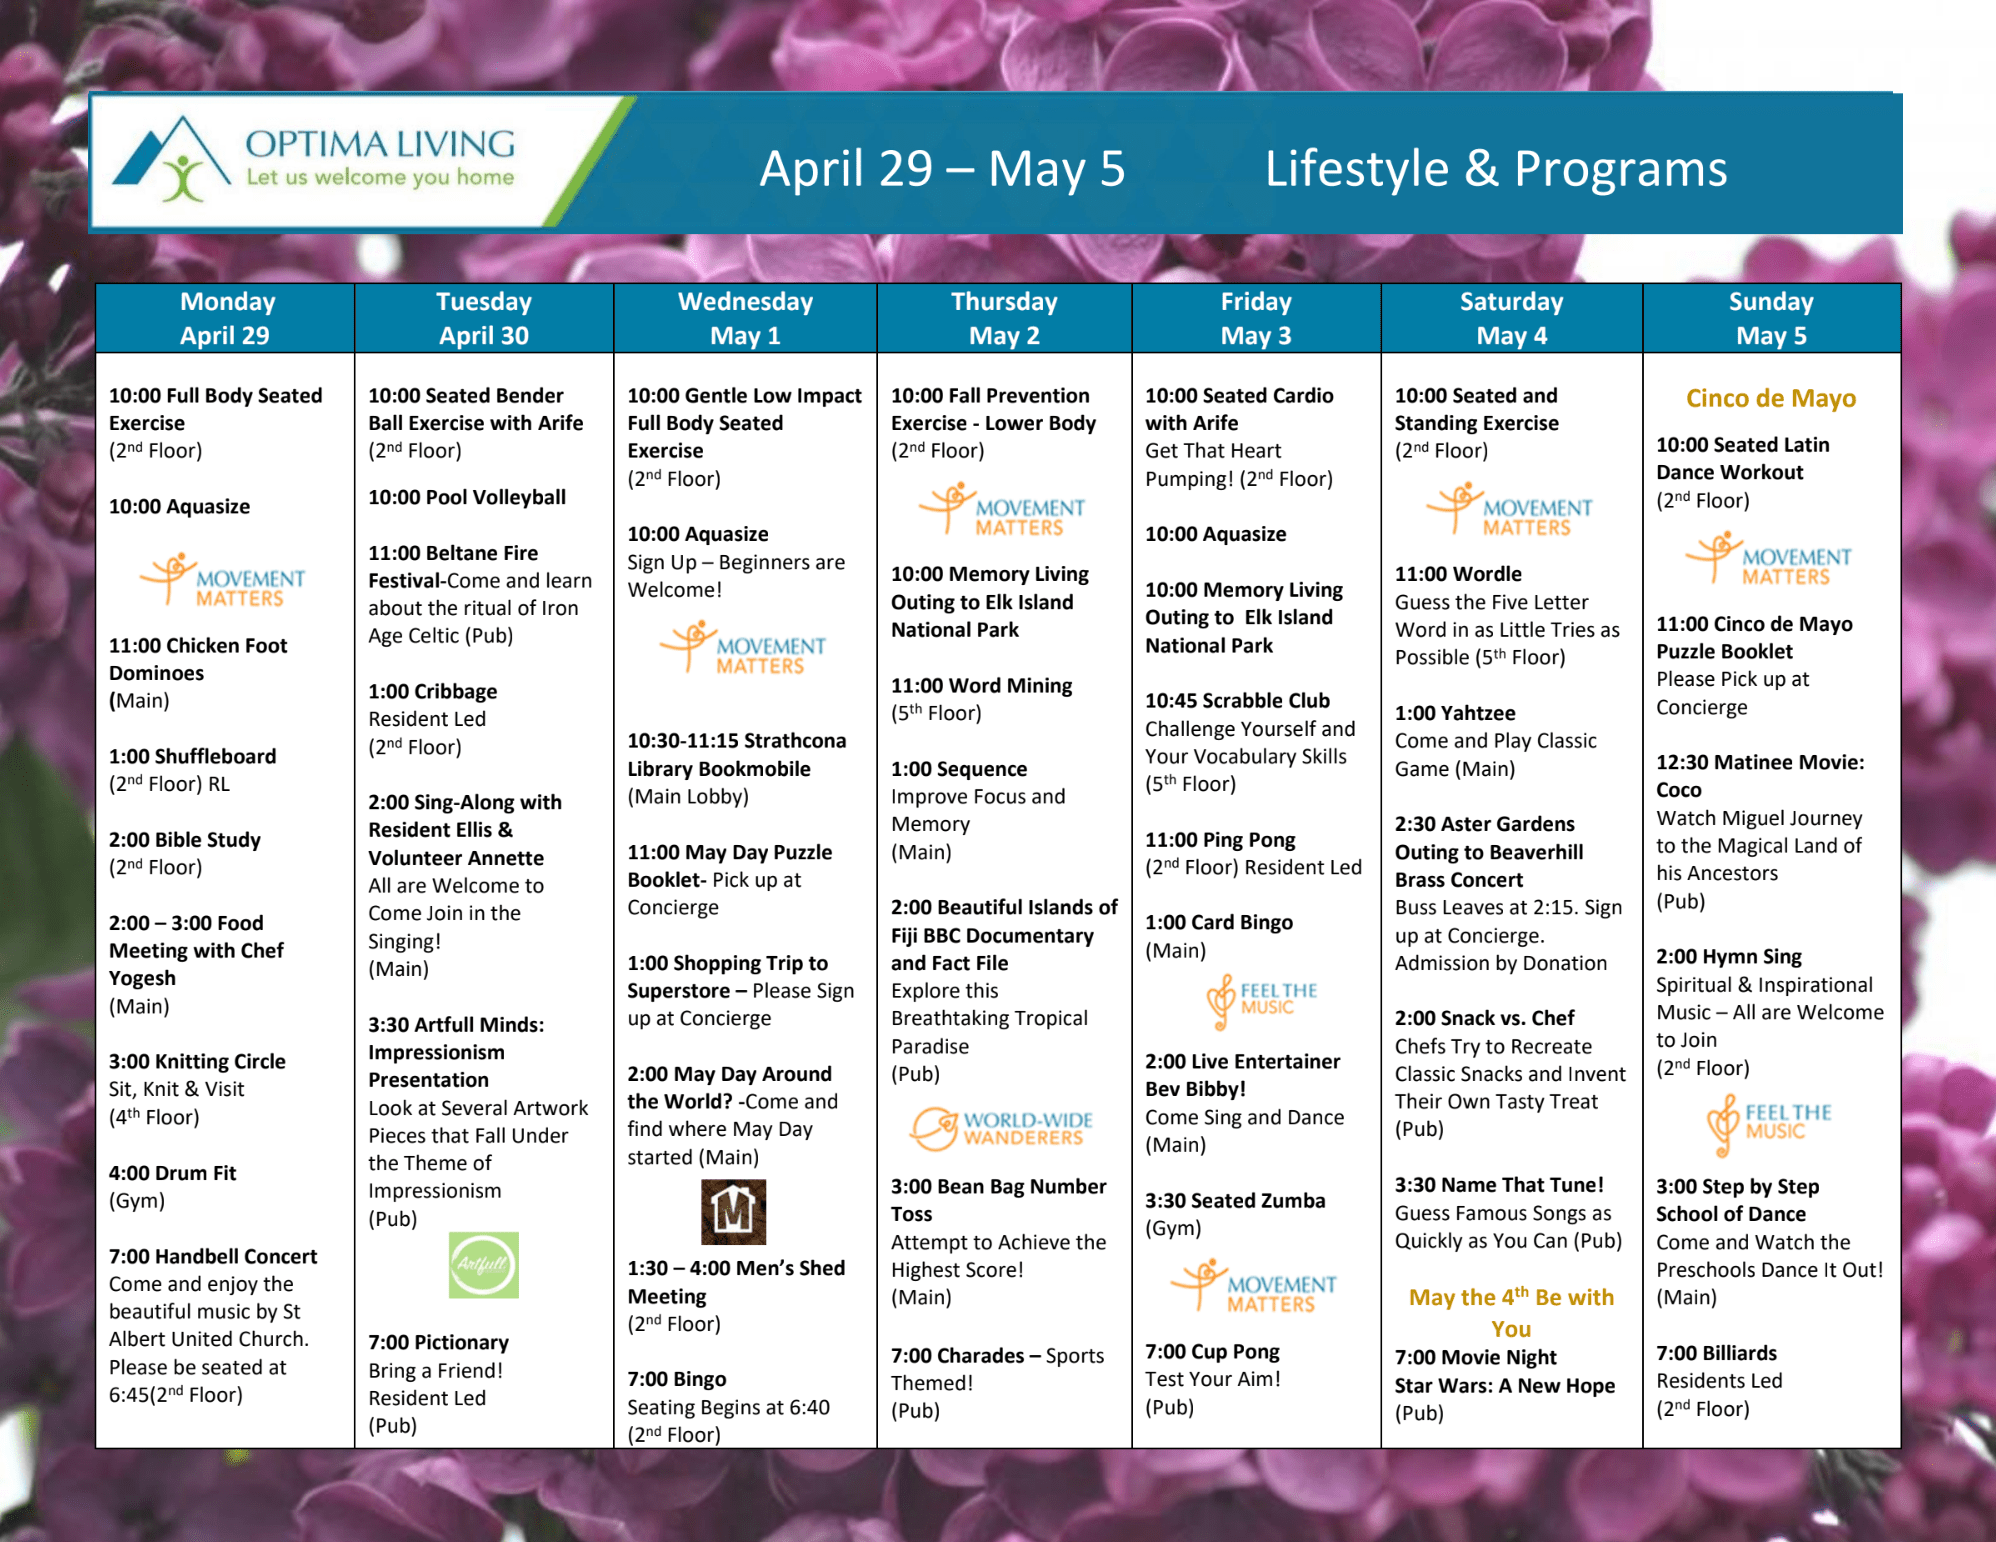 Aster Gardens April 29 - May 5 event calendar